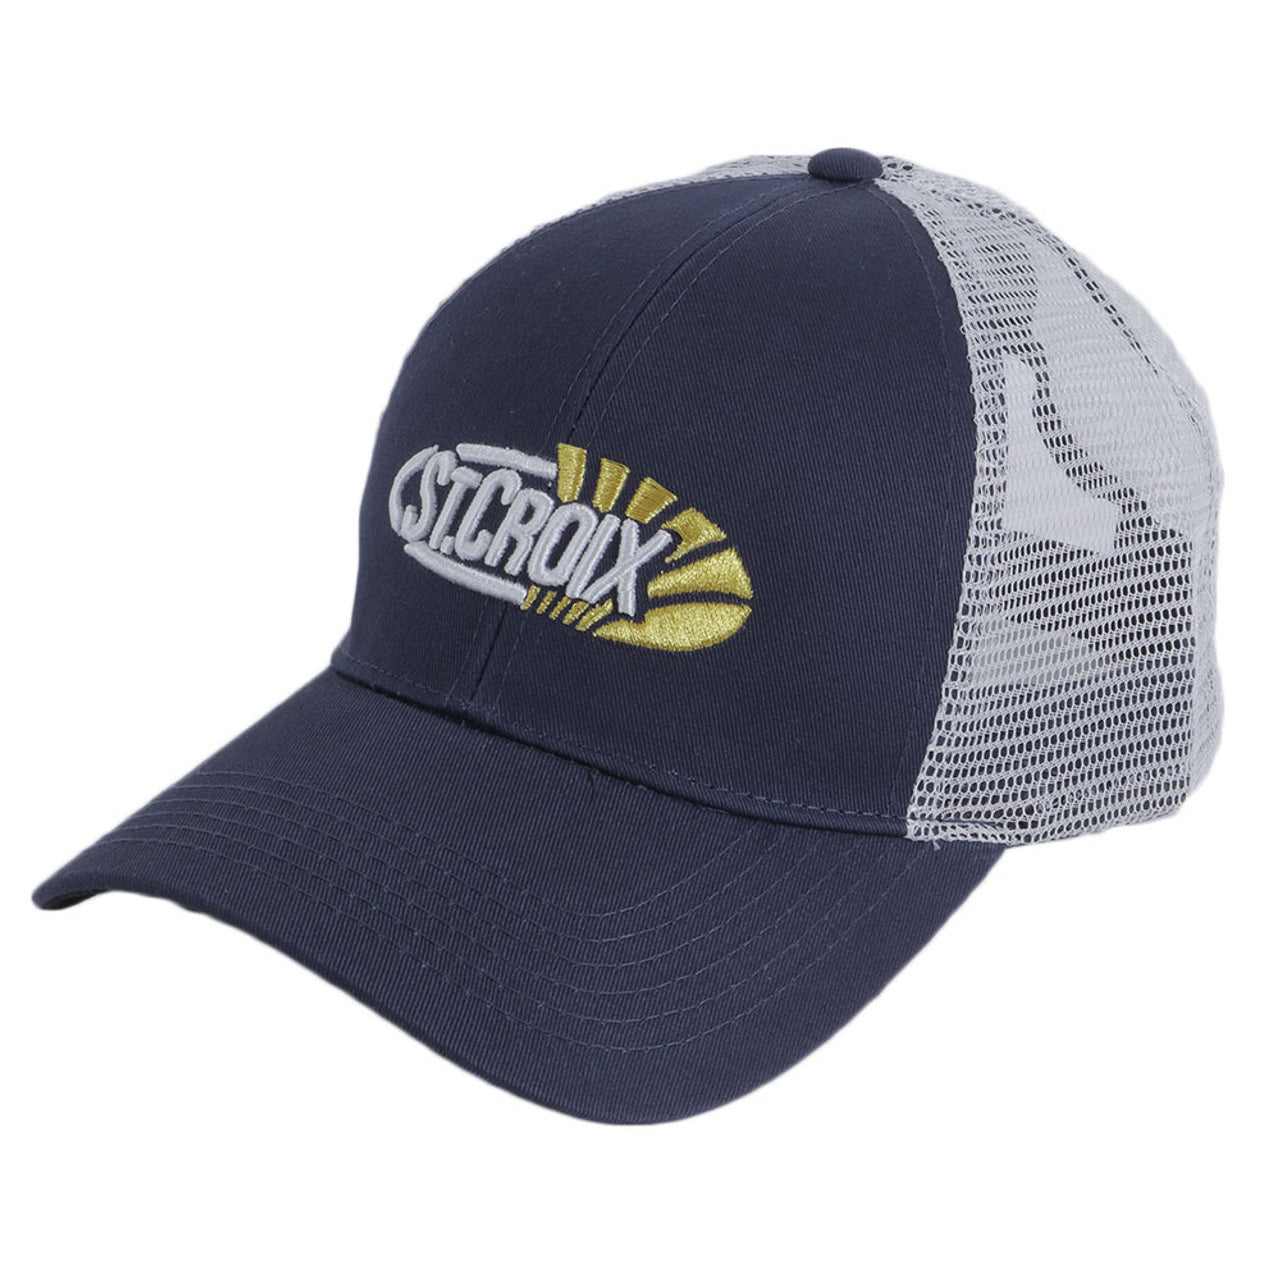 St. Croix Trucker Mesh Hat